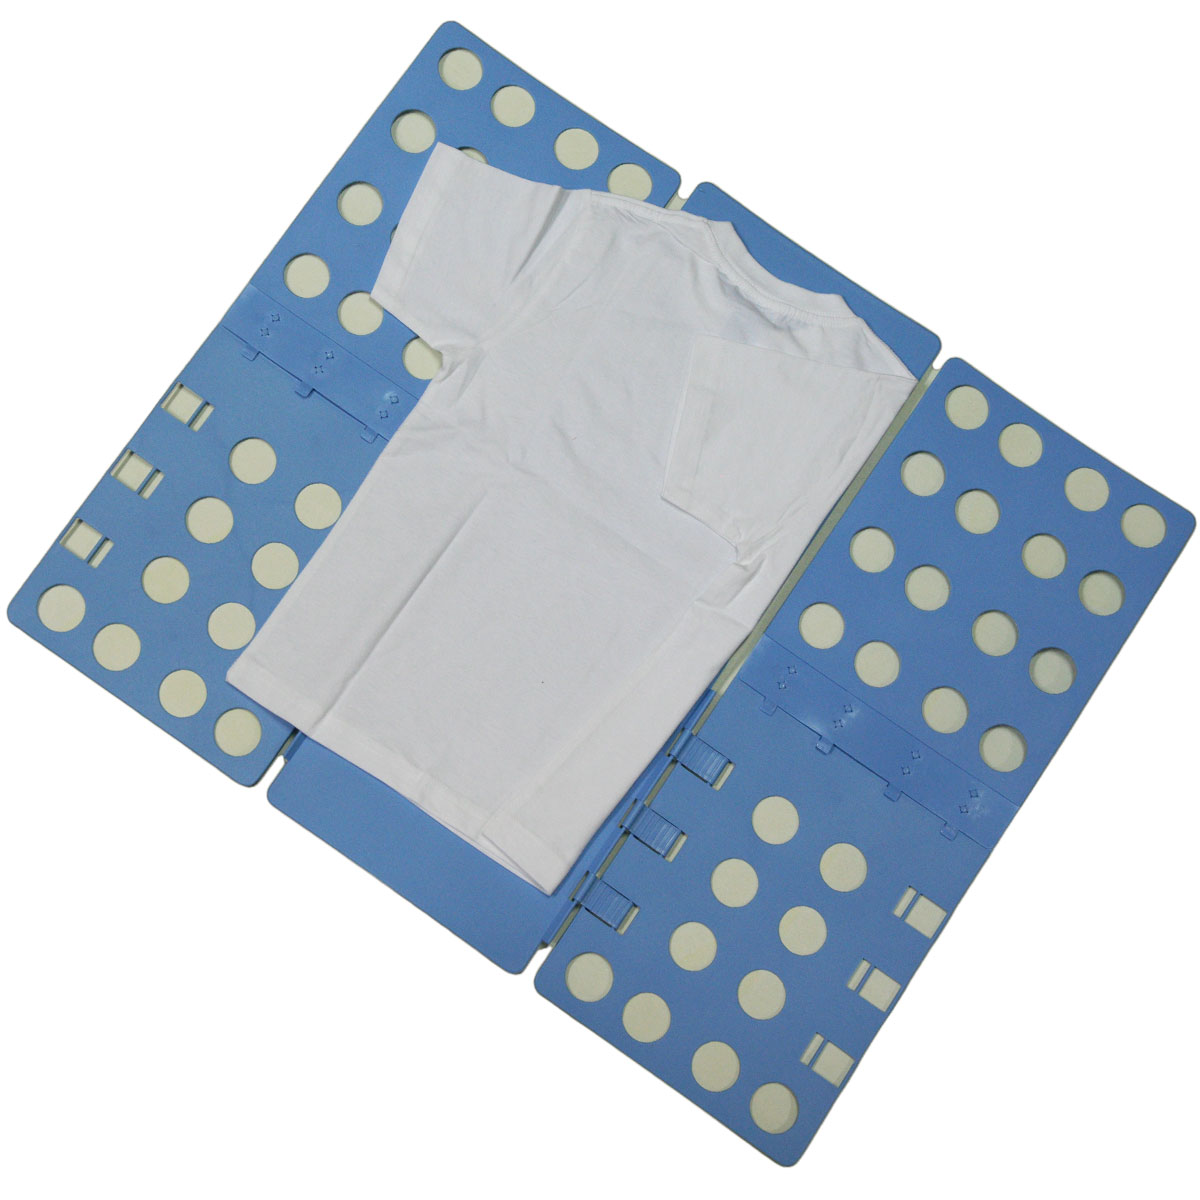 T-Shirt folding board